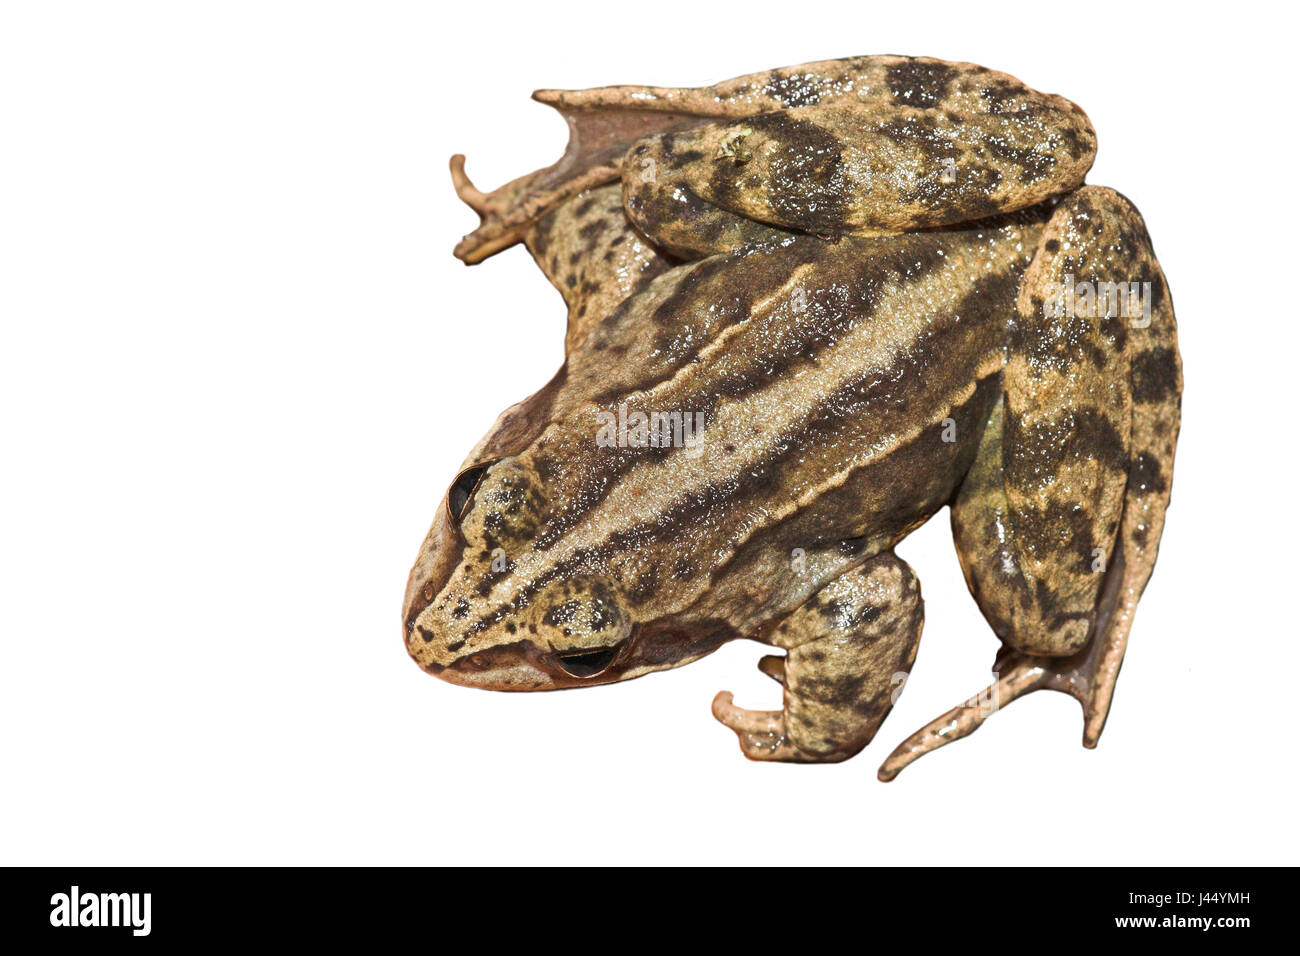 Moorfrog contre fond blanc (rendu) Banque D'Images